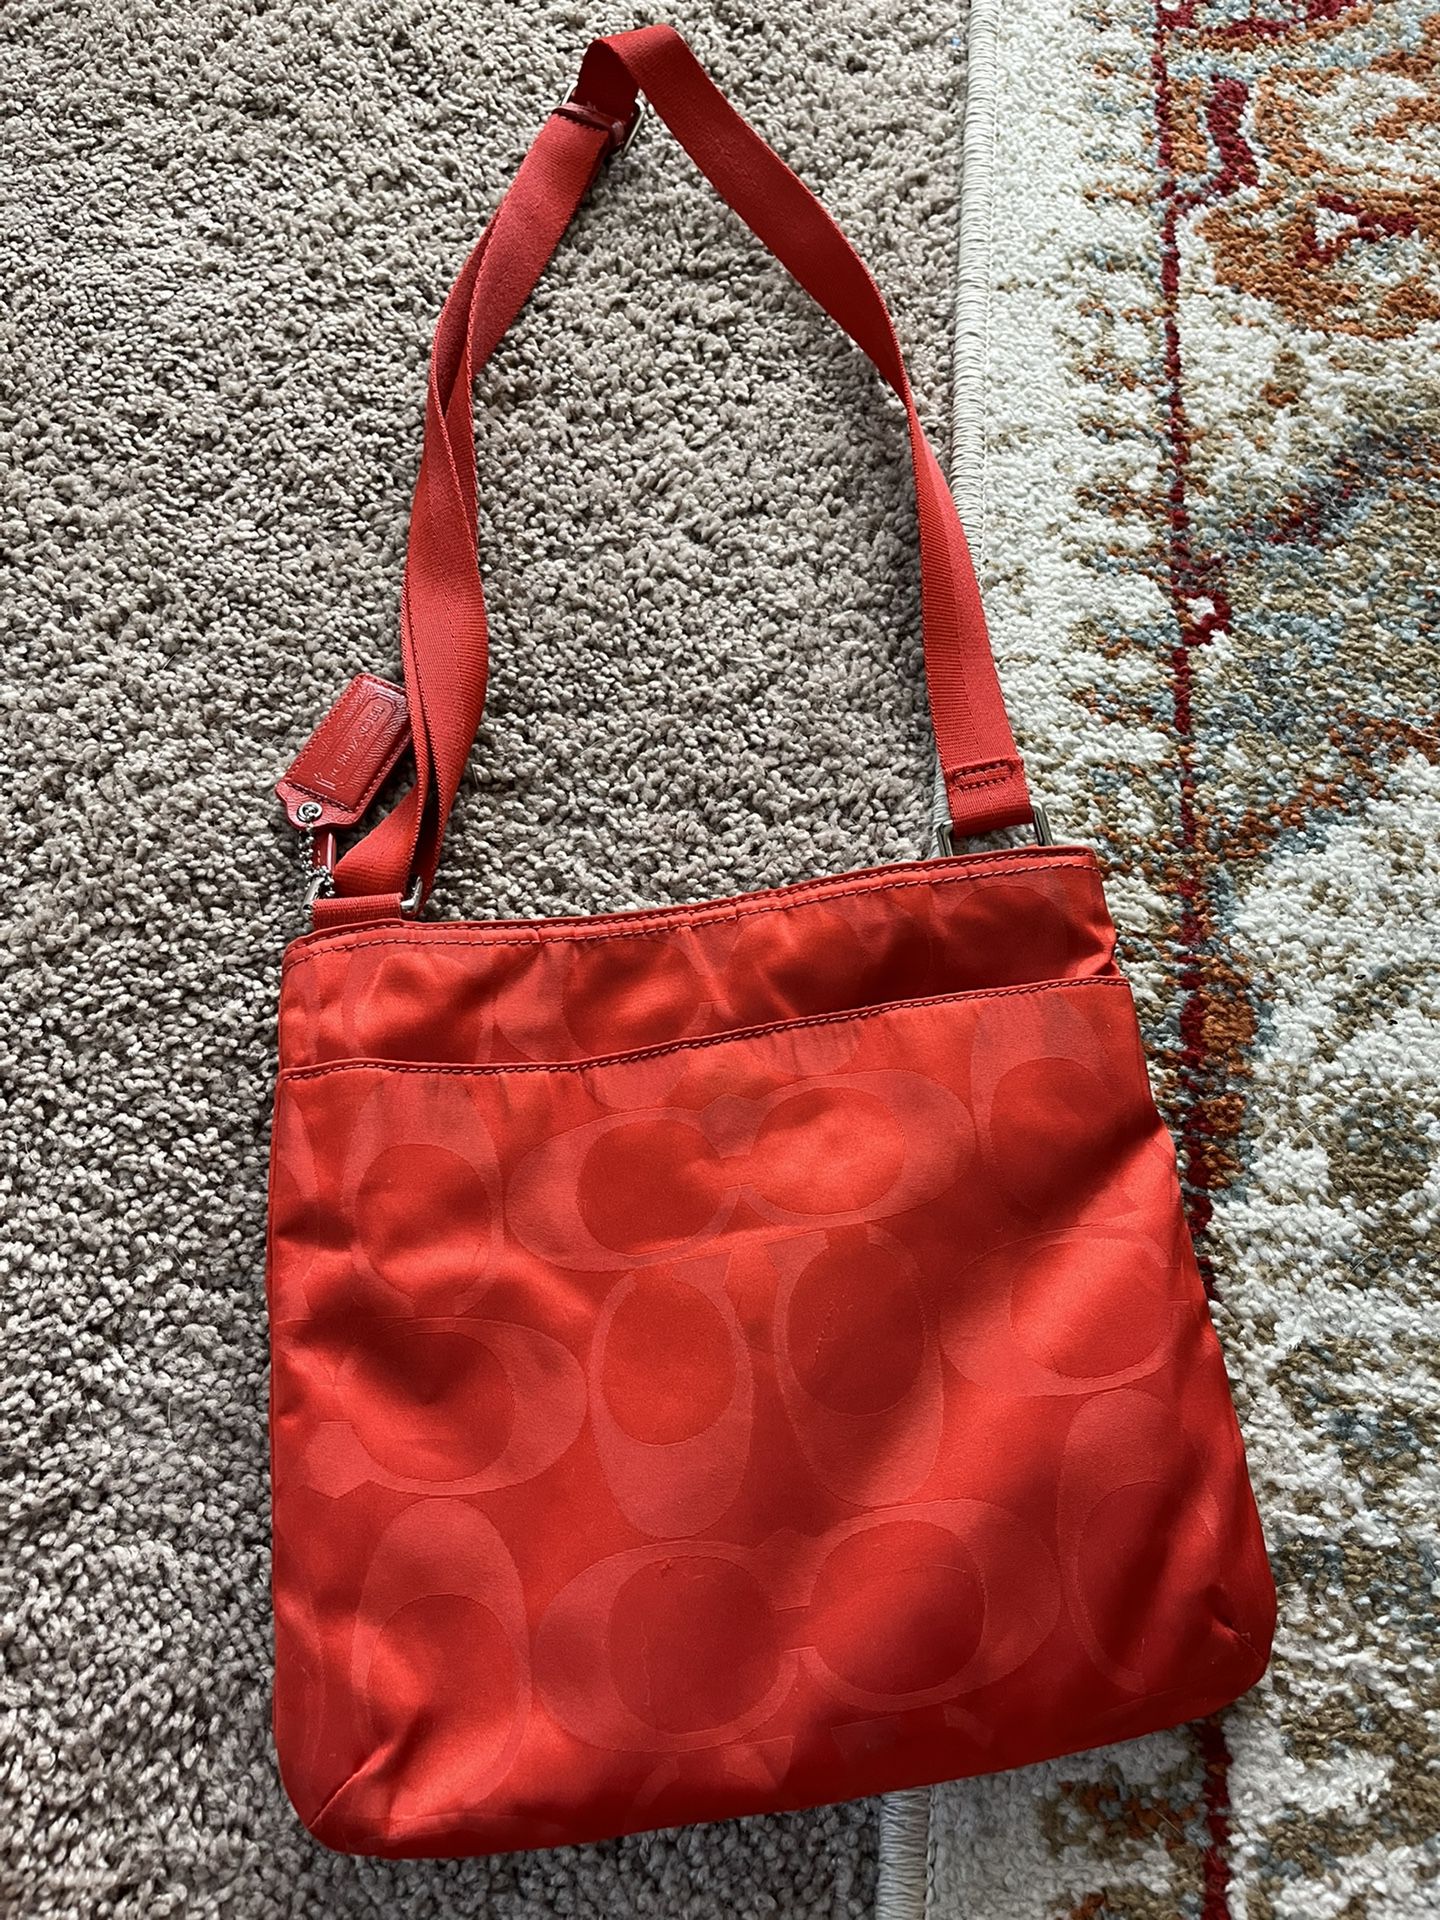 COACH Bag -Red